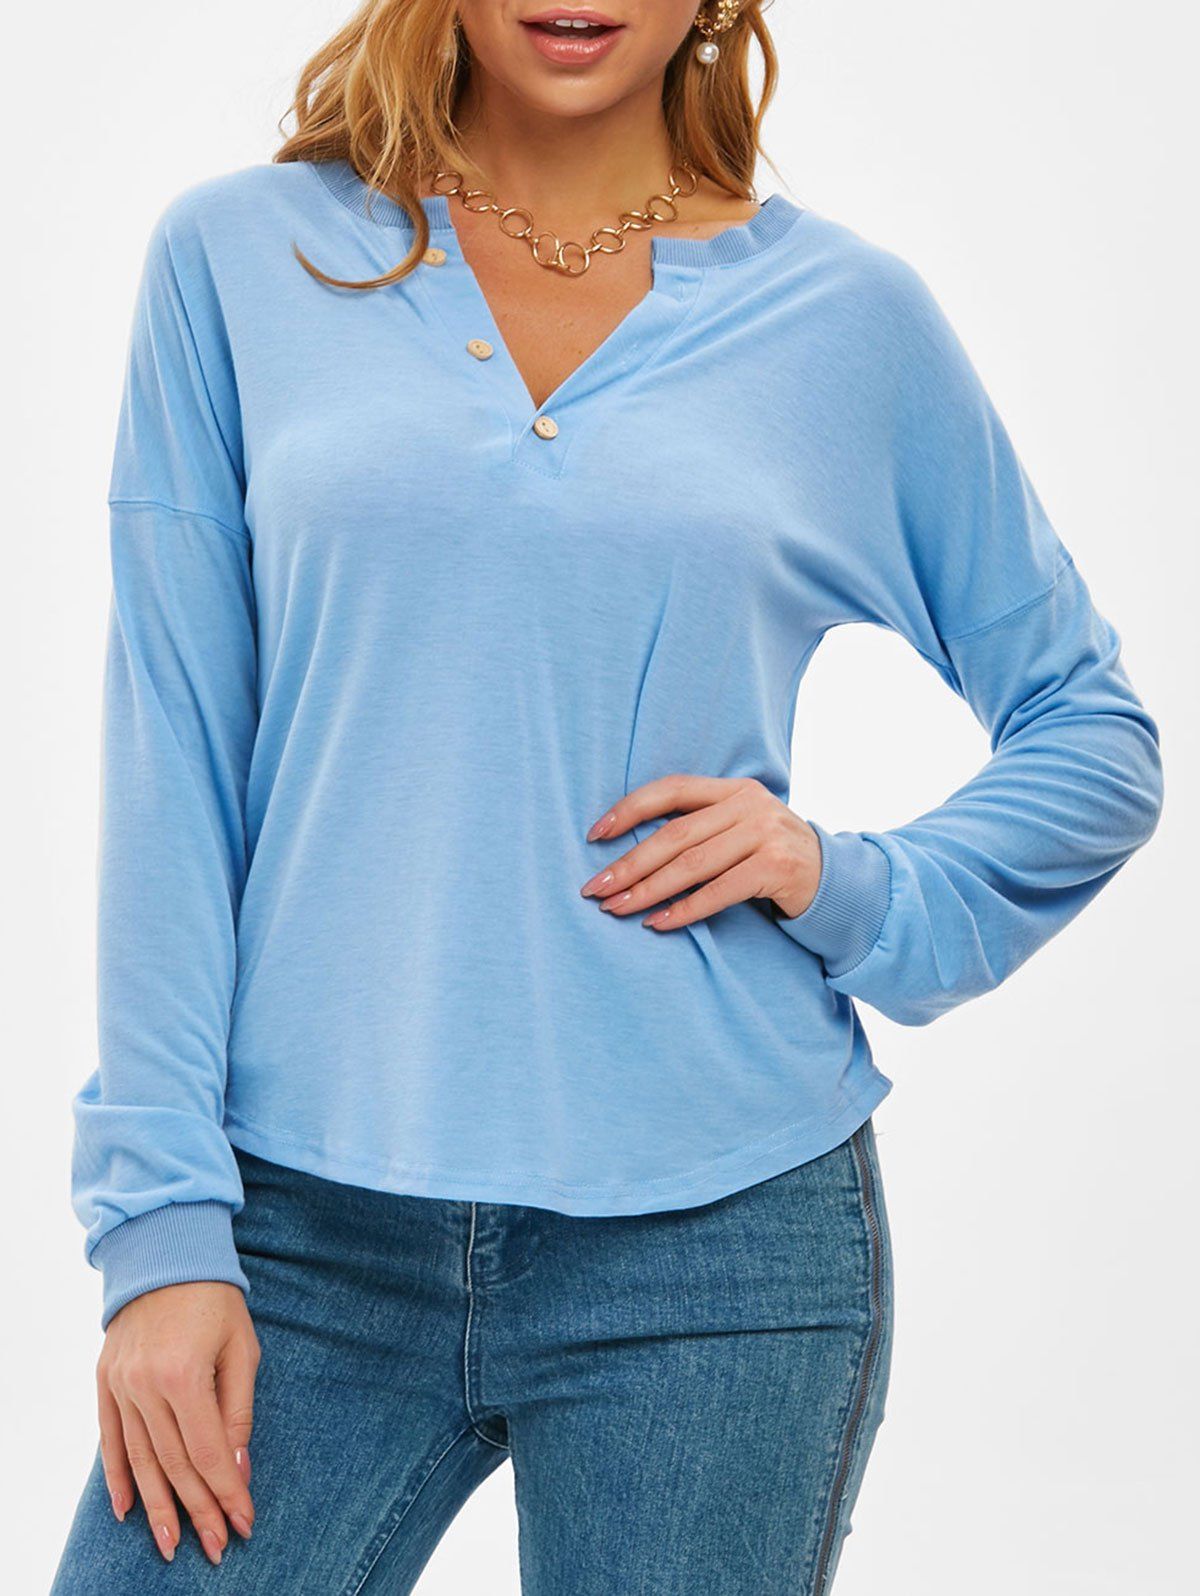 Sweat-shirt Demi-Boutonné à Goutte Epaule Bleu clair XL